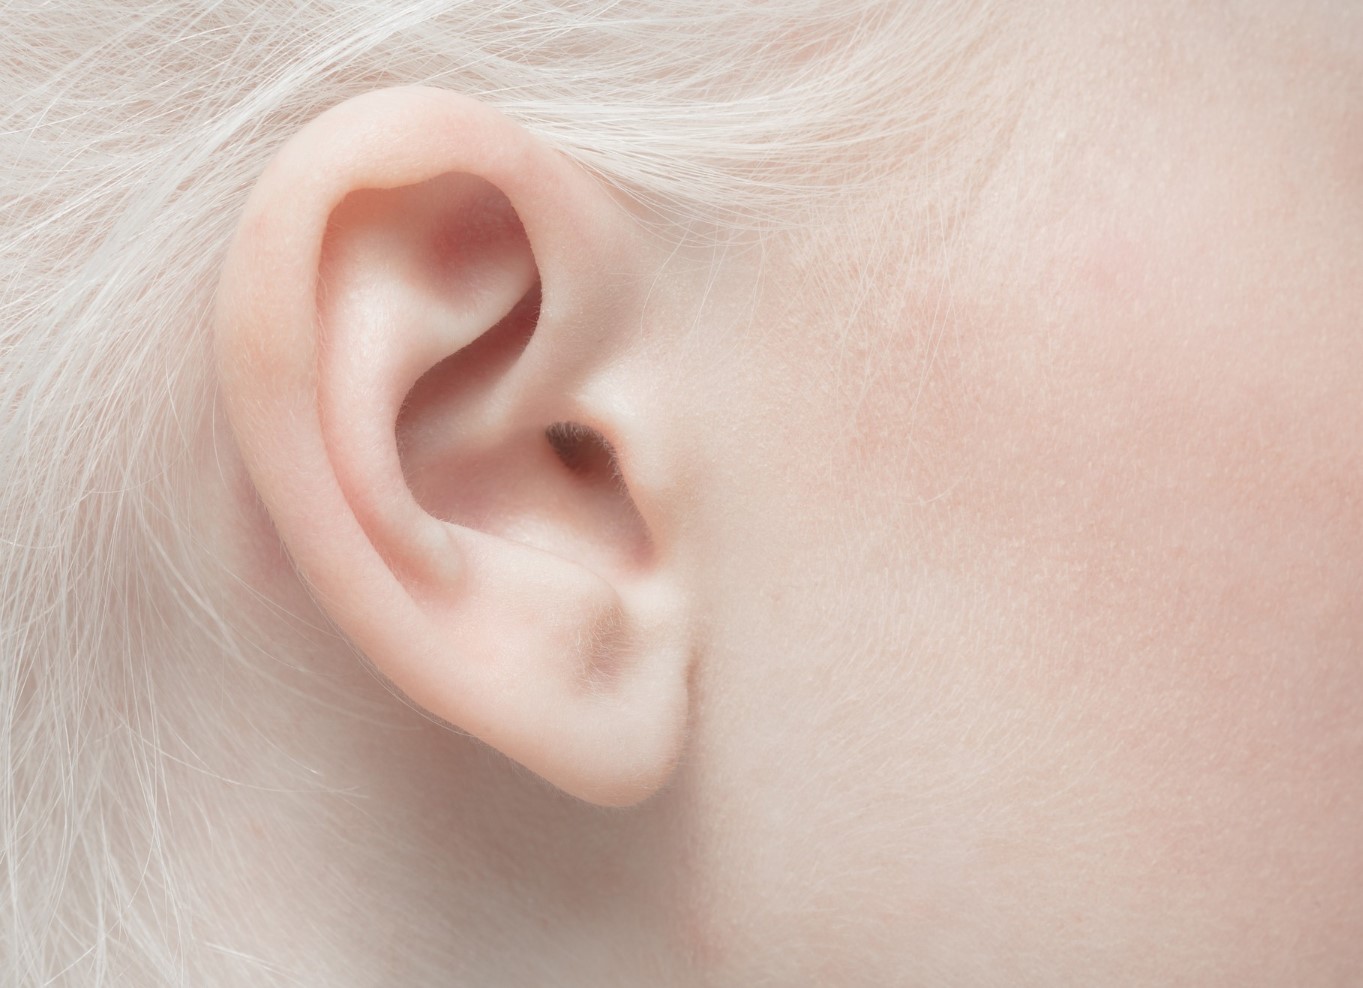 Stretched or Split Ear Lobe Repair in SG